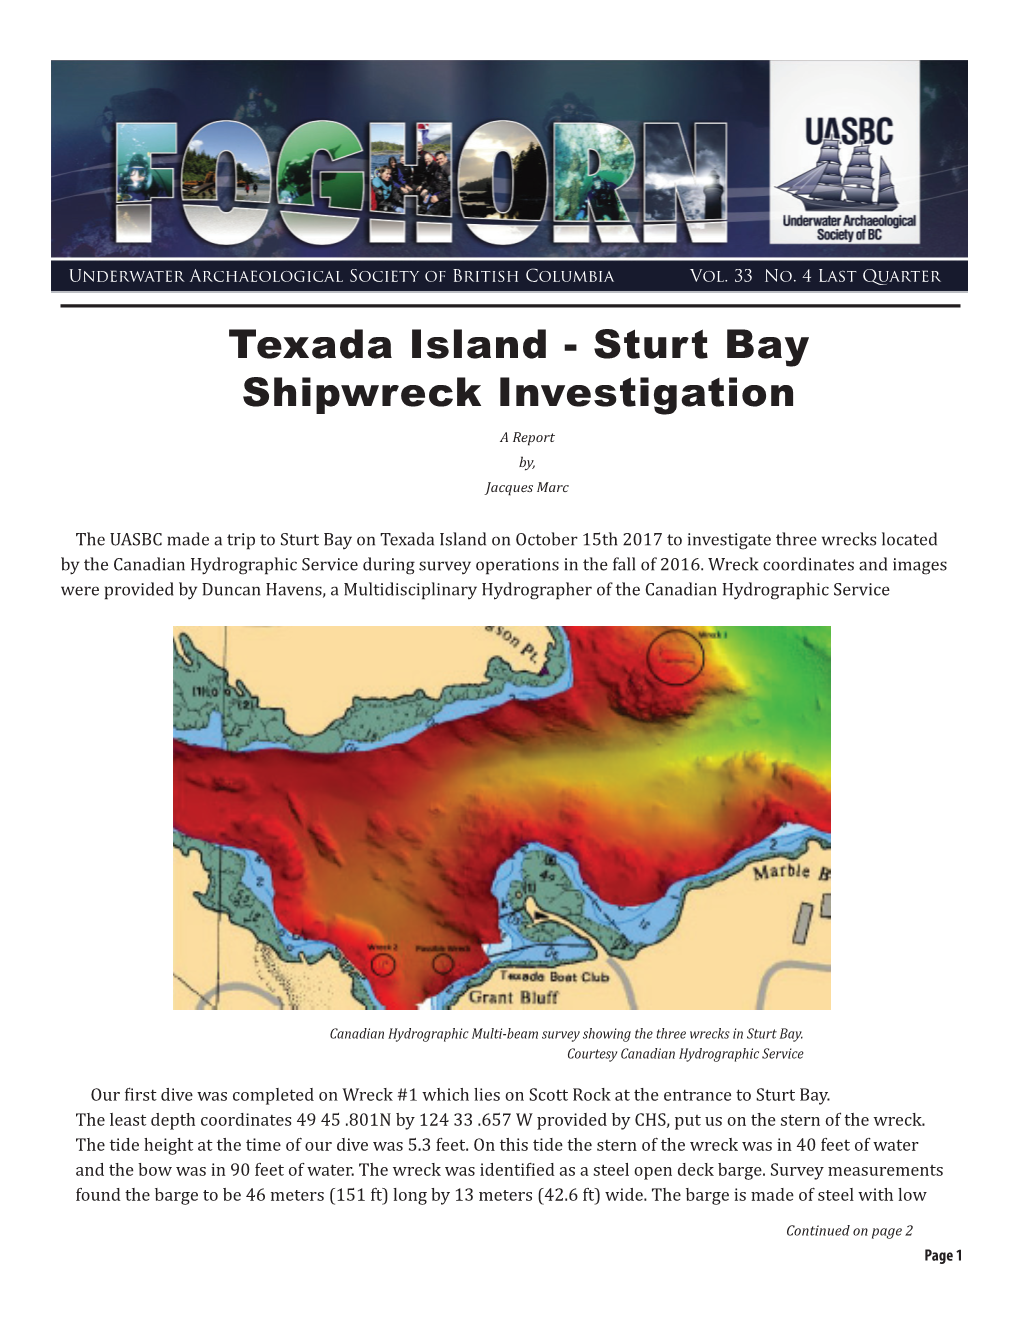 Texada Island - Sturt Bay Shipwreck Investigation a Report By, Jacques Marc